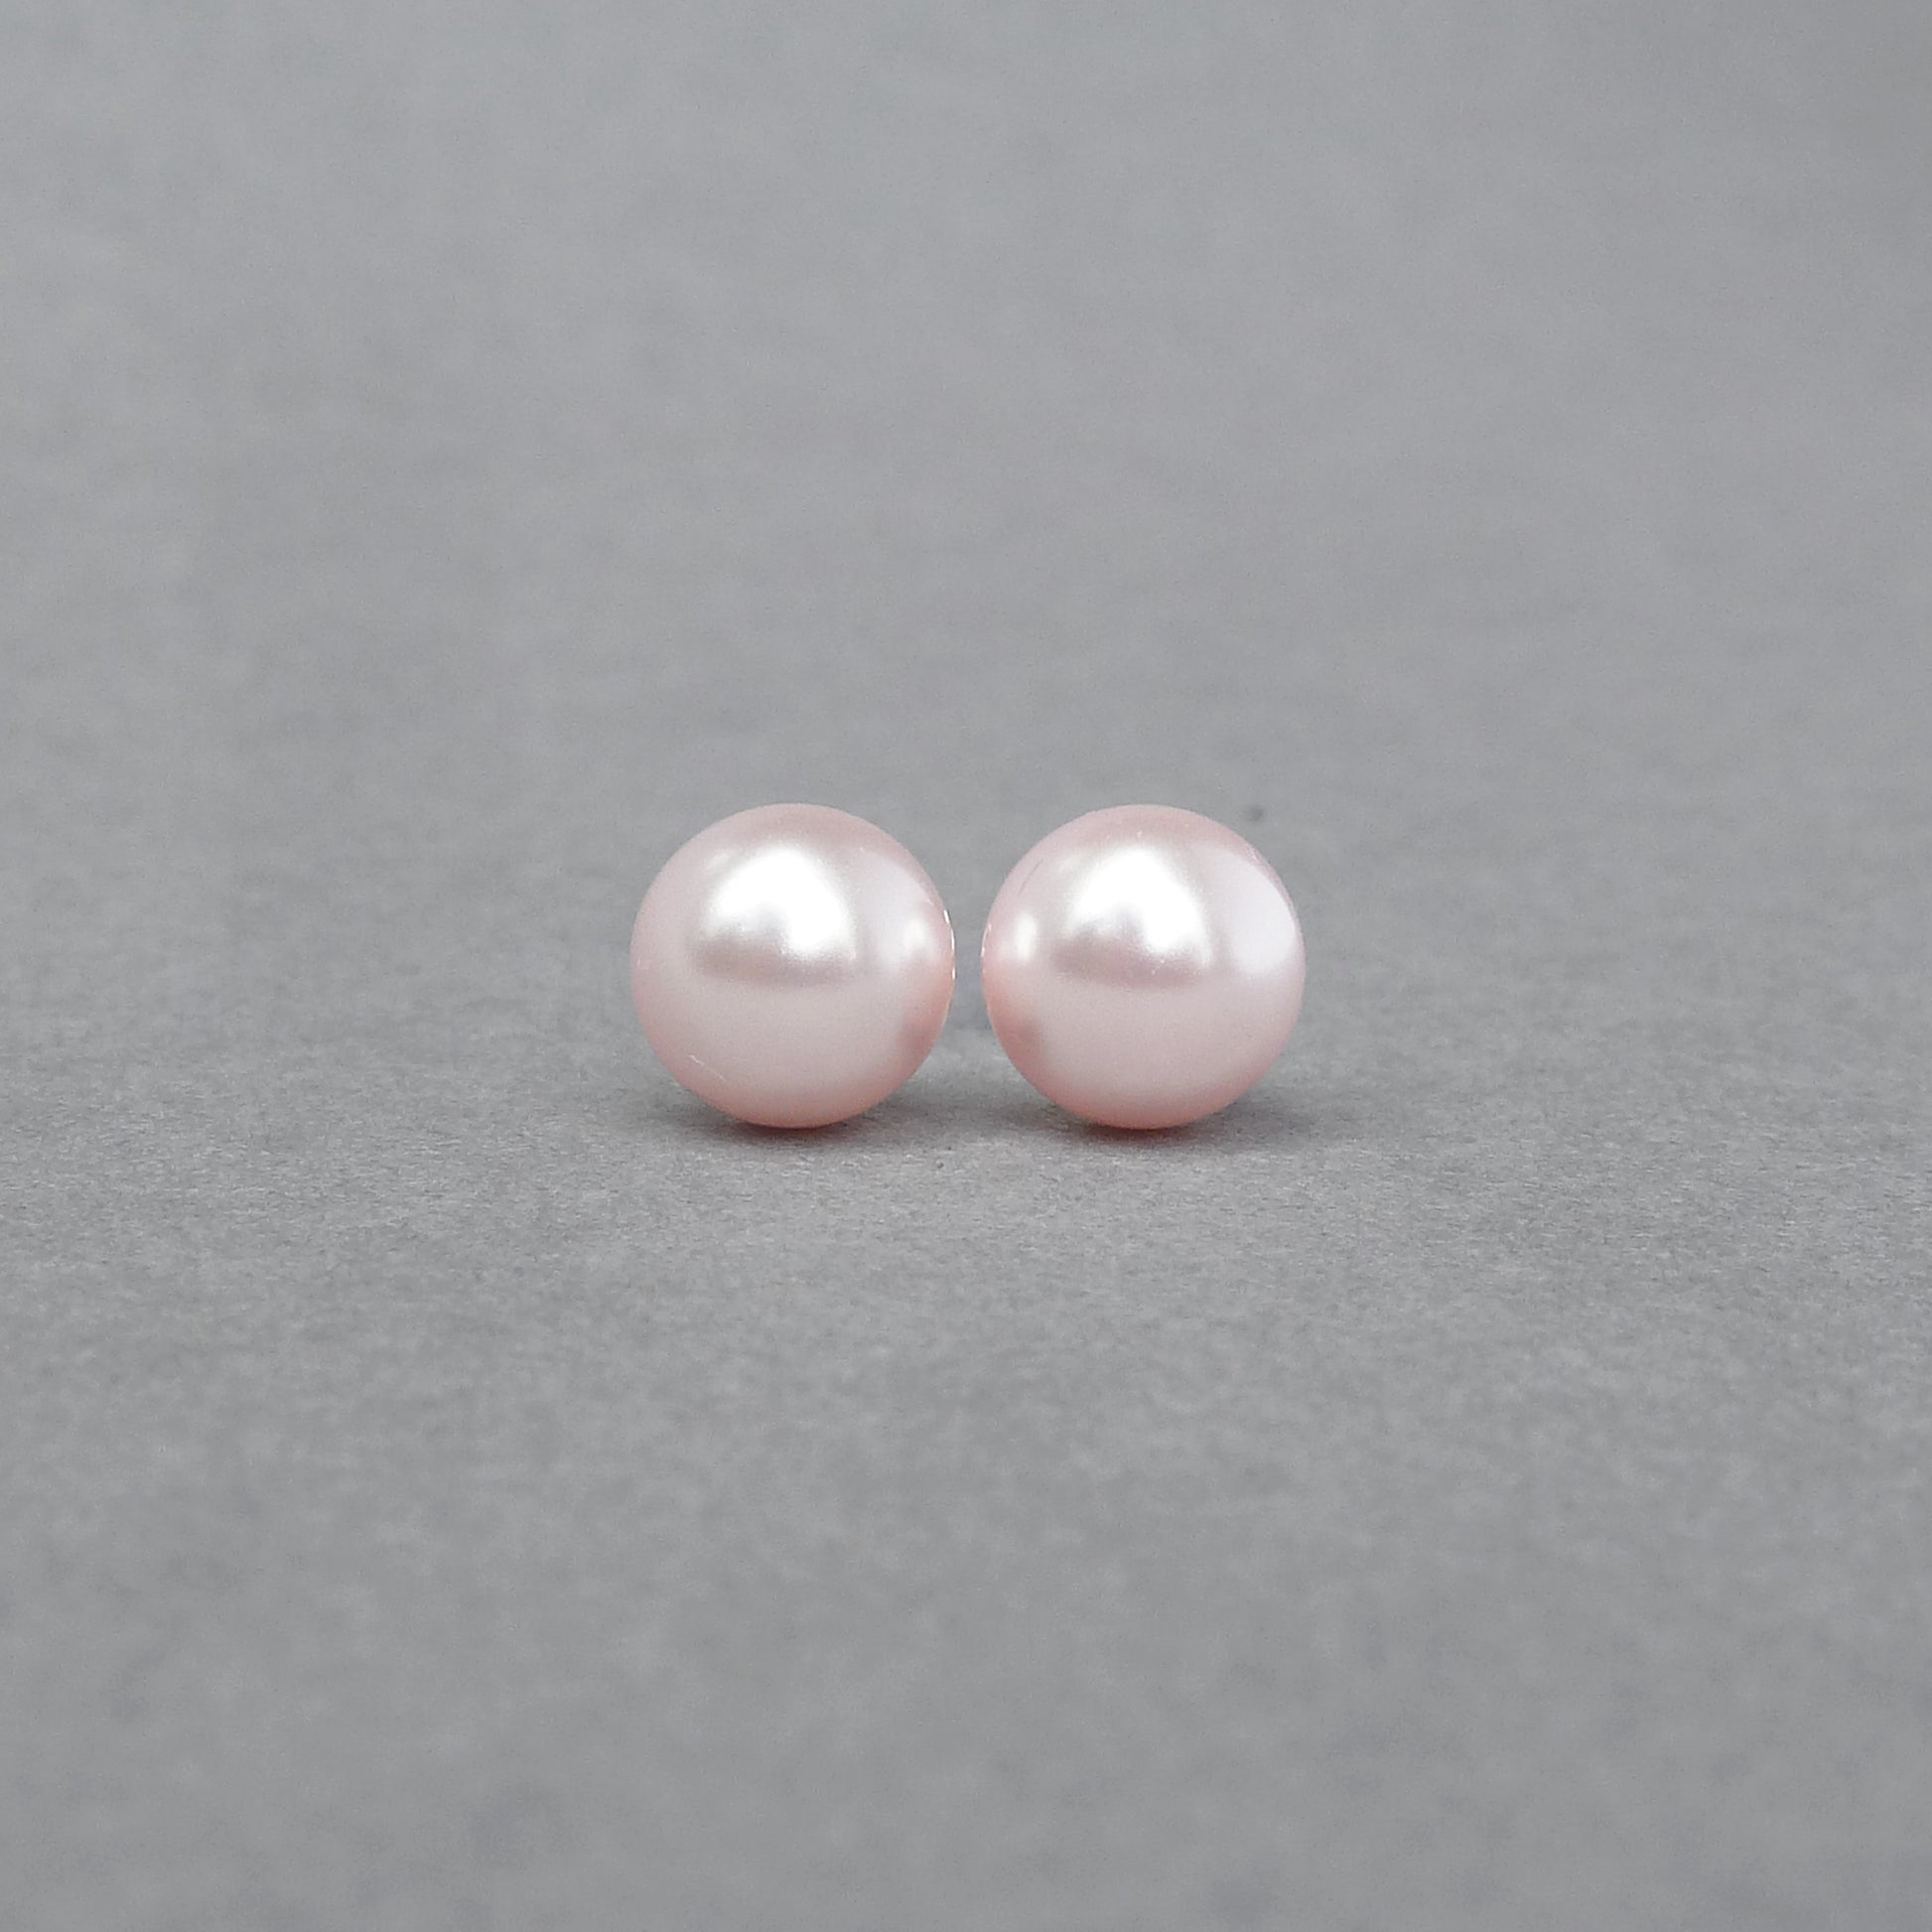 8mm blush pink pearl stud earrings